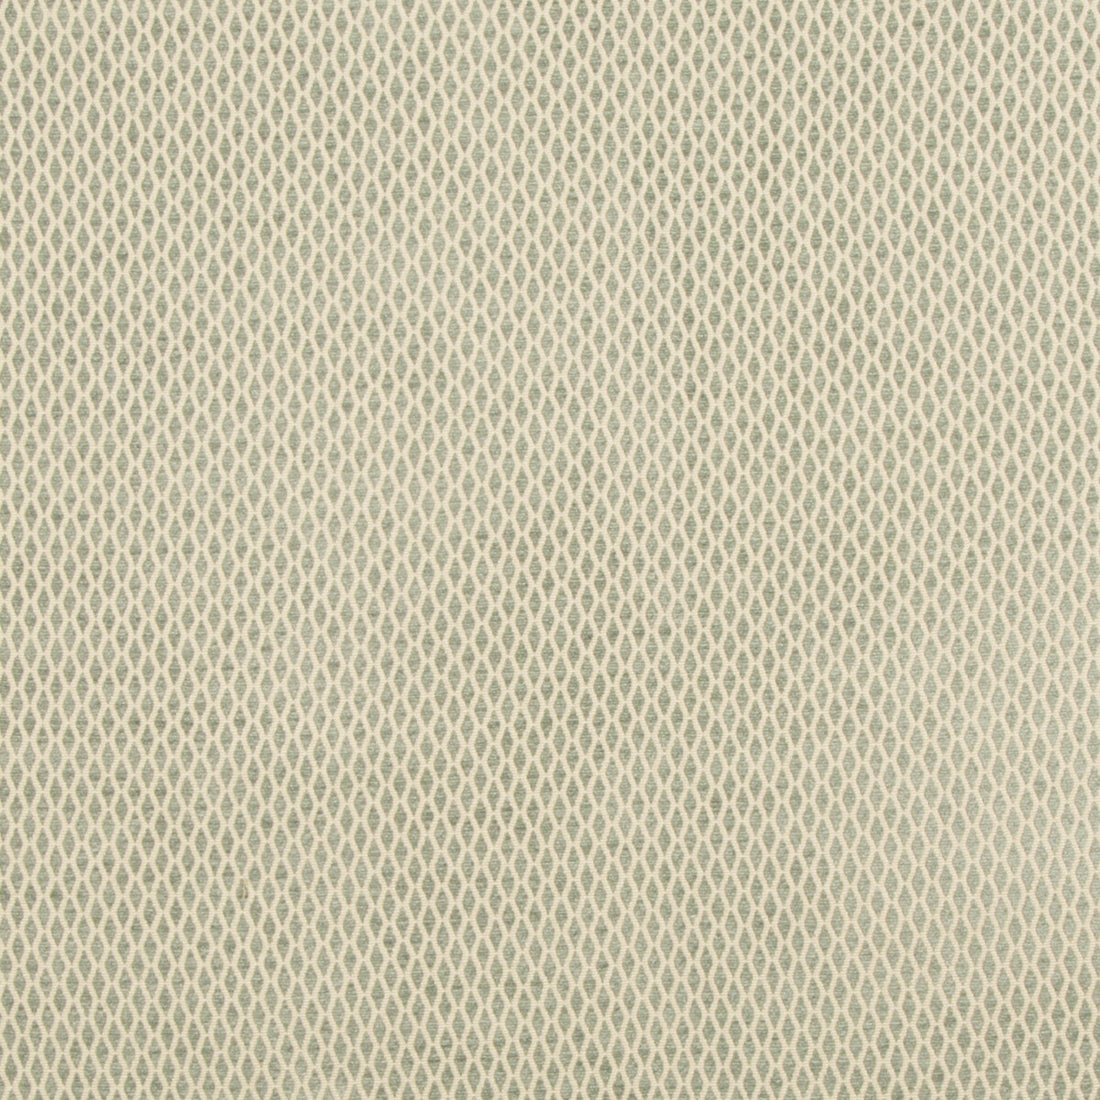 Eddie Chenille fabric in lake color - pattern GWF-2584.153.0 - by Lee Jofa Modern